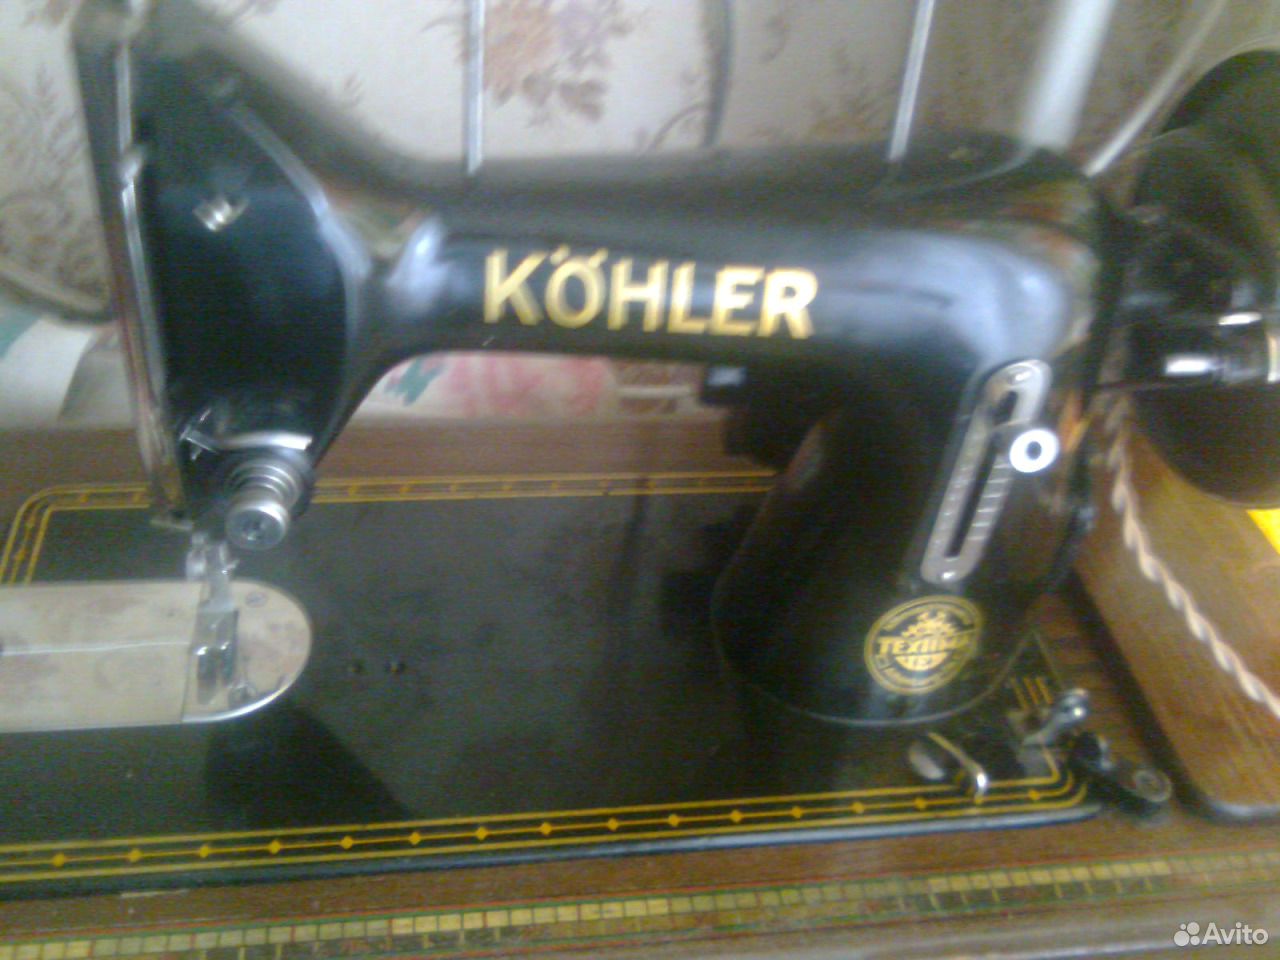 Немецкая швейная машинка kohler выпуска 1968